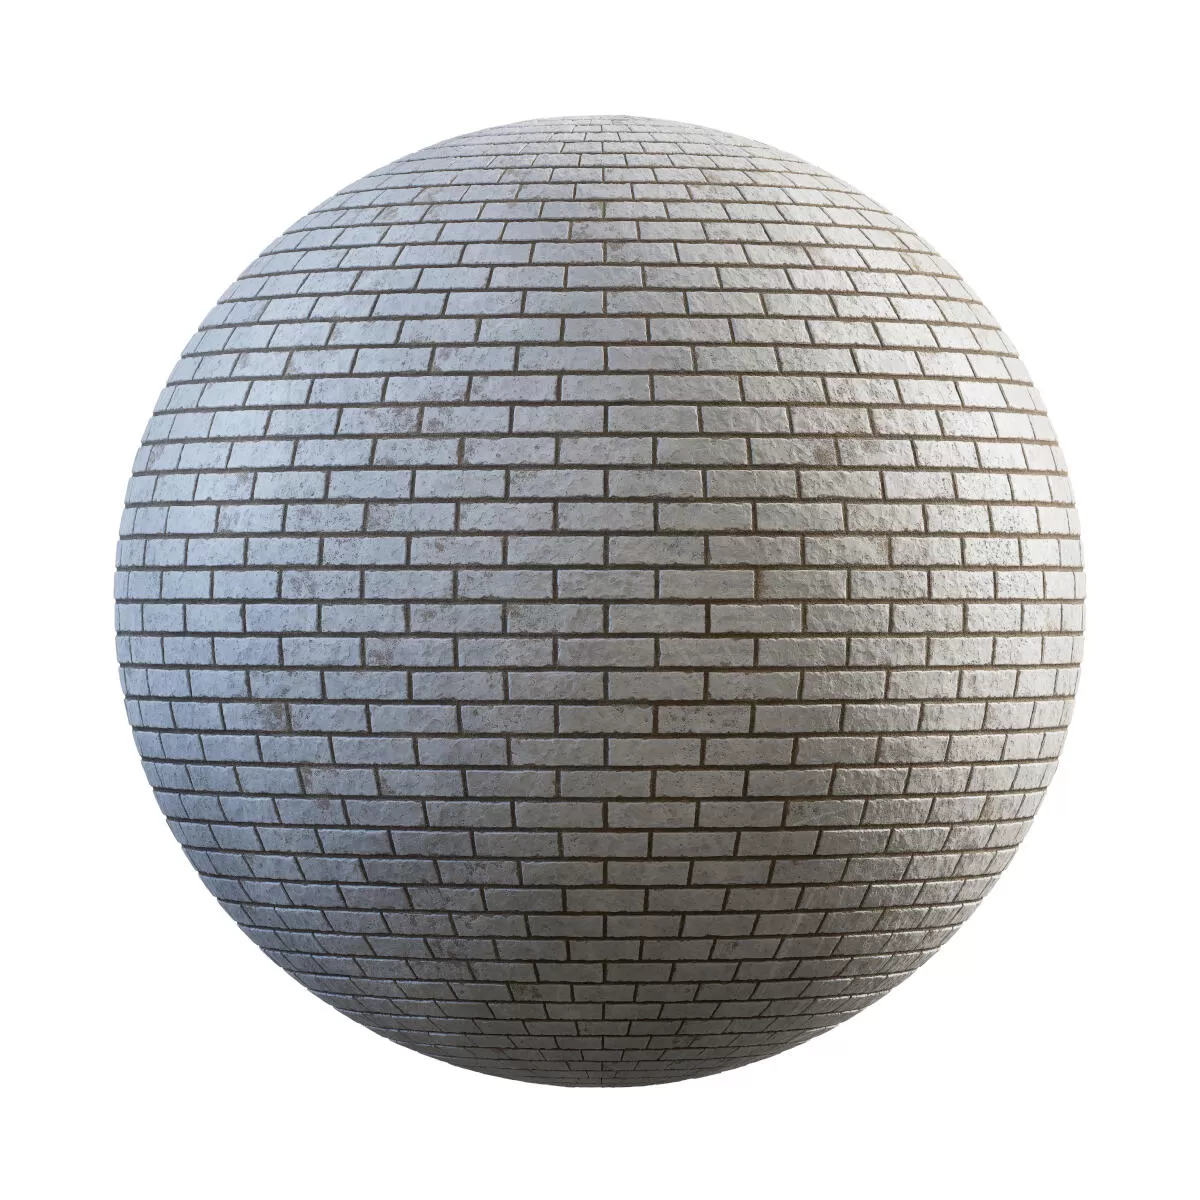 PBR Textures Volume 34 – Pavements – 4K – white_rectangular_stone_pavement_36_61